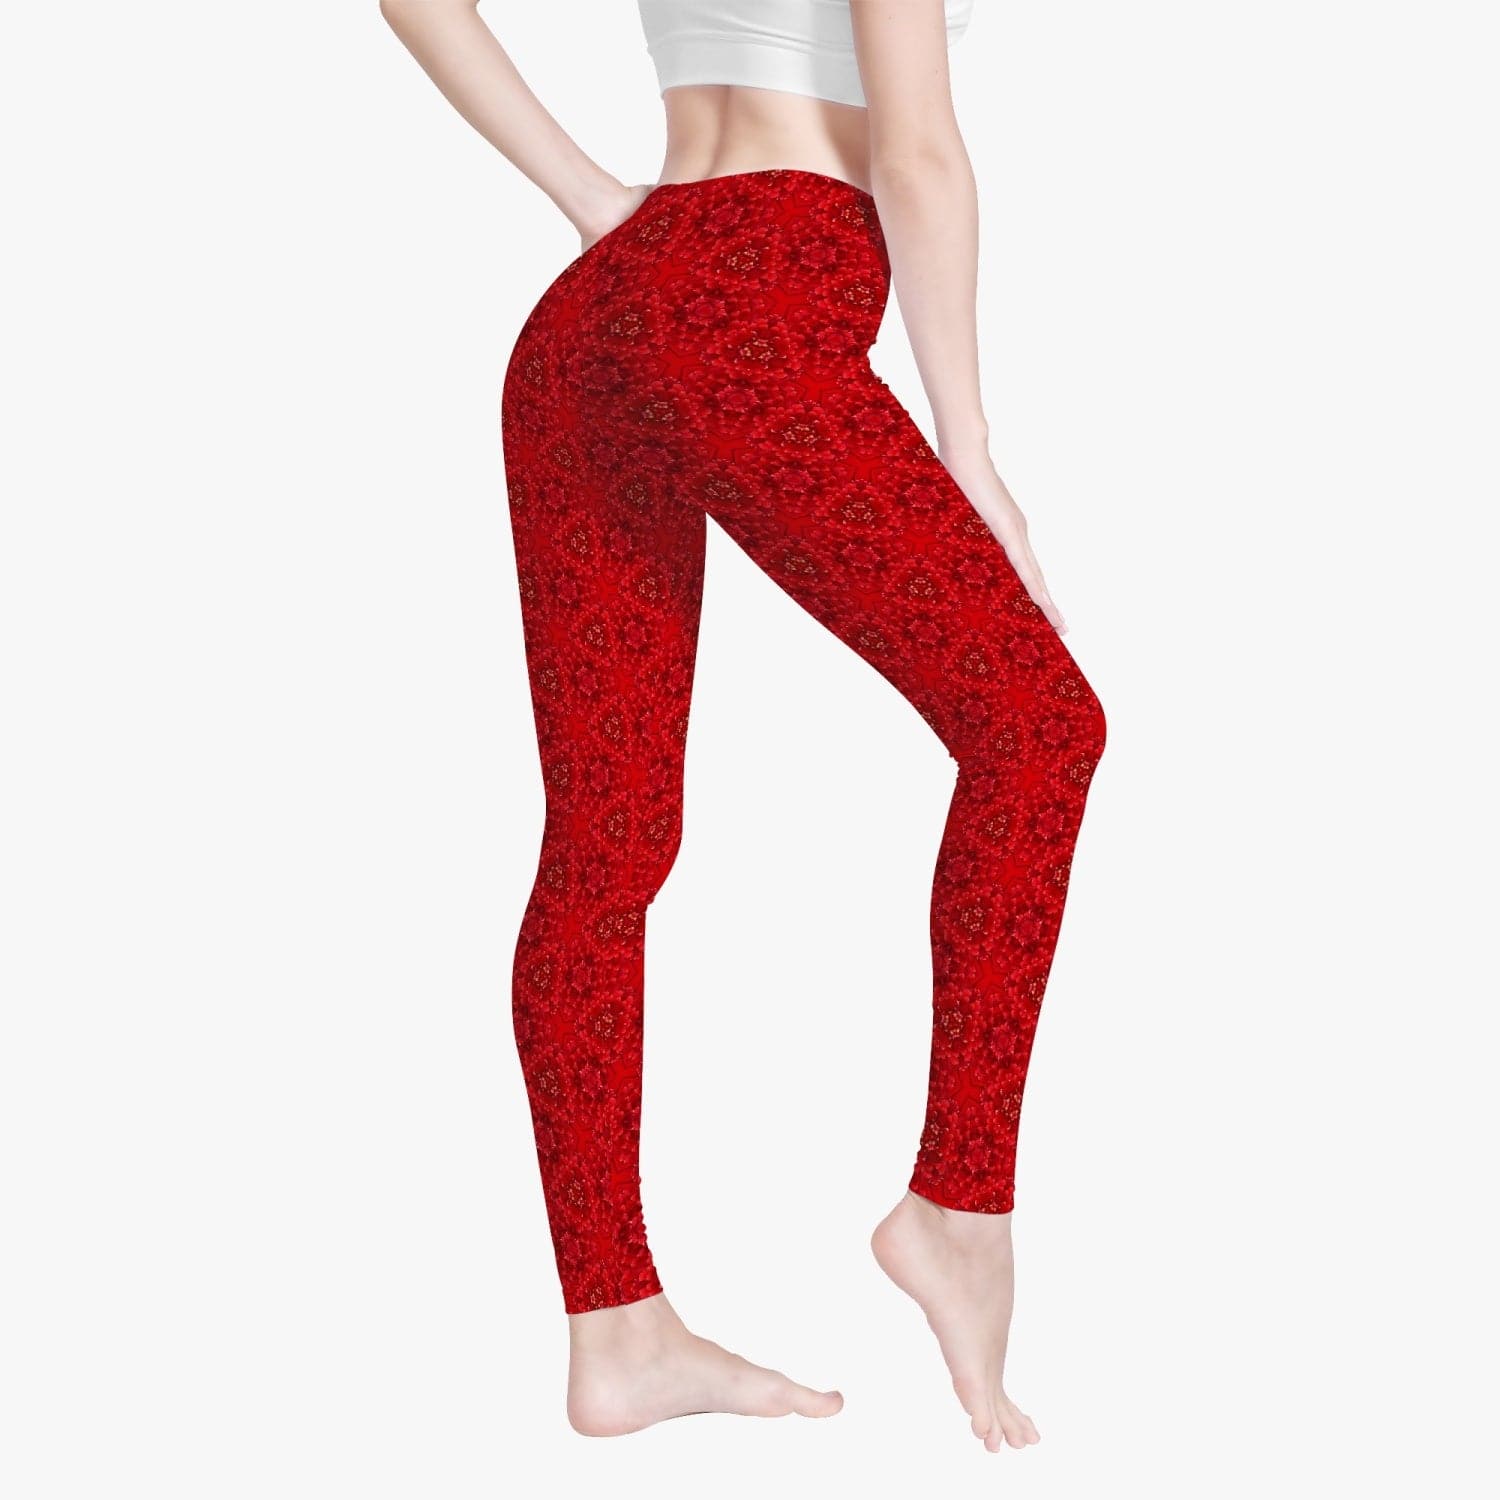 Red Root Chacra Yoga Pants, by Sensus Studio Design